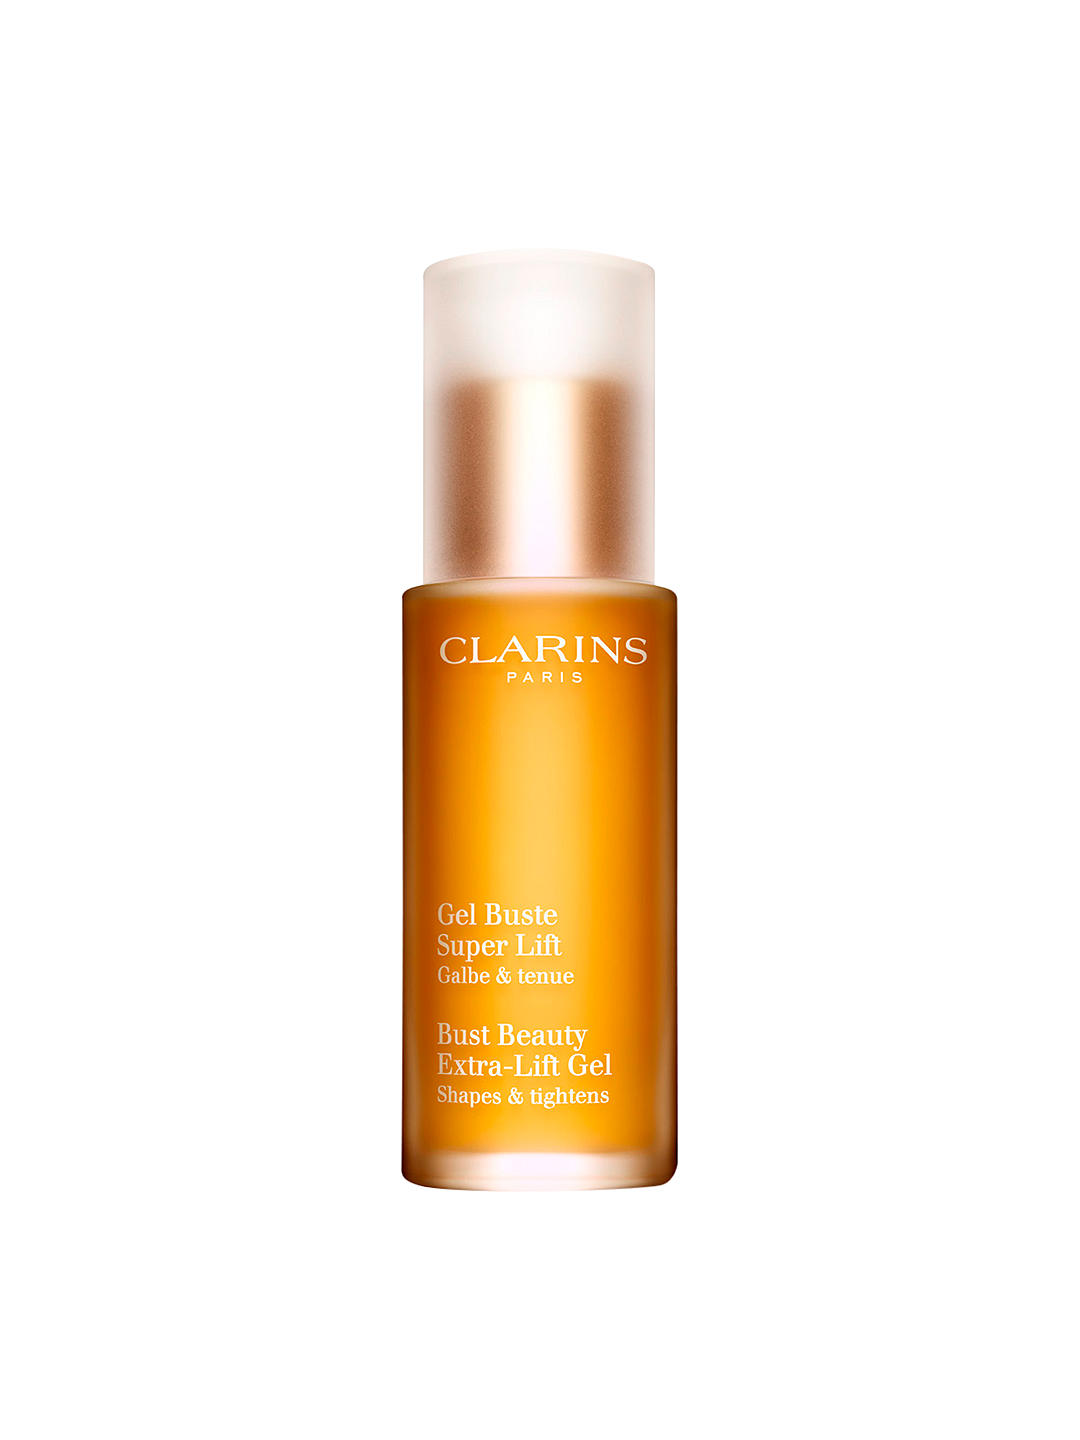 Clarins Bust Beauty Extra-Lift Gel, 50ml 1